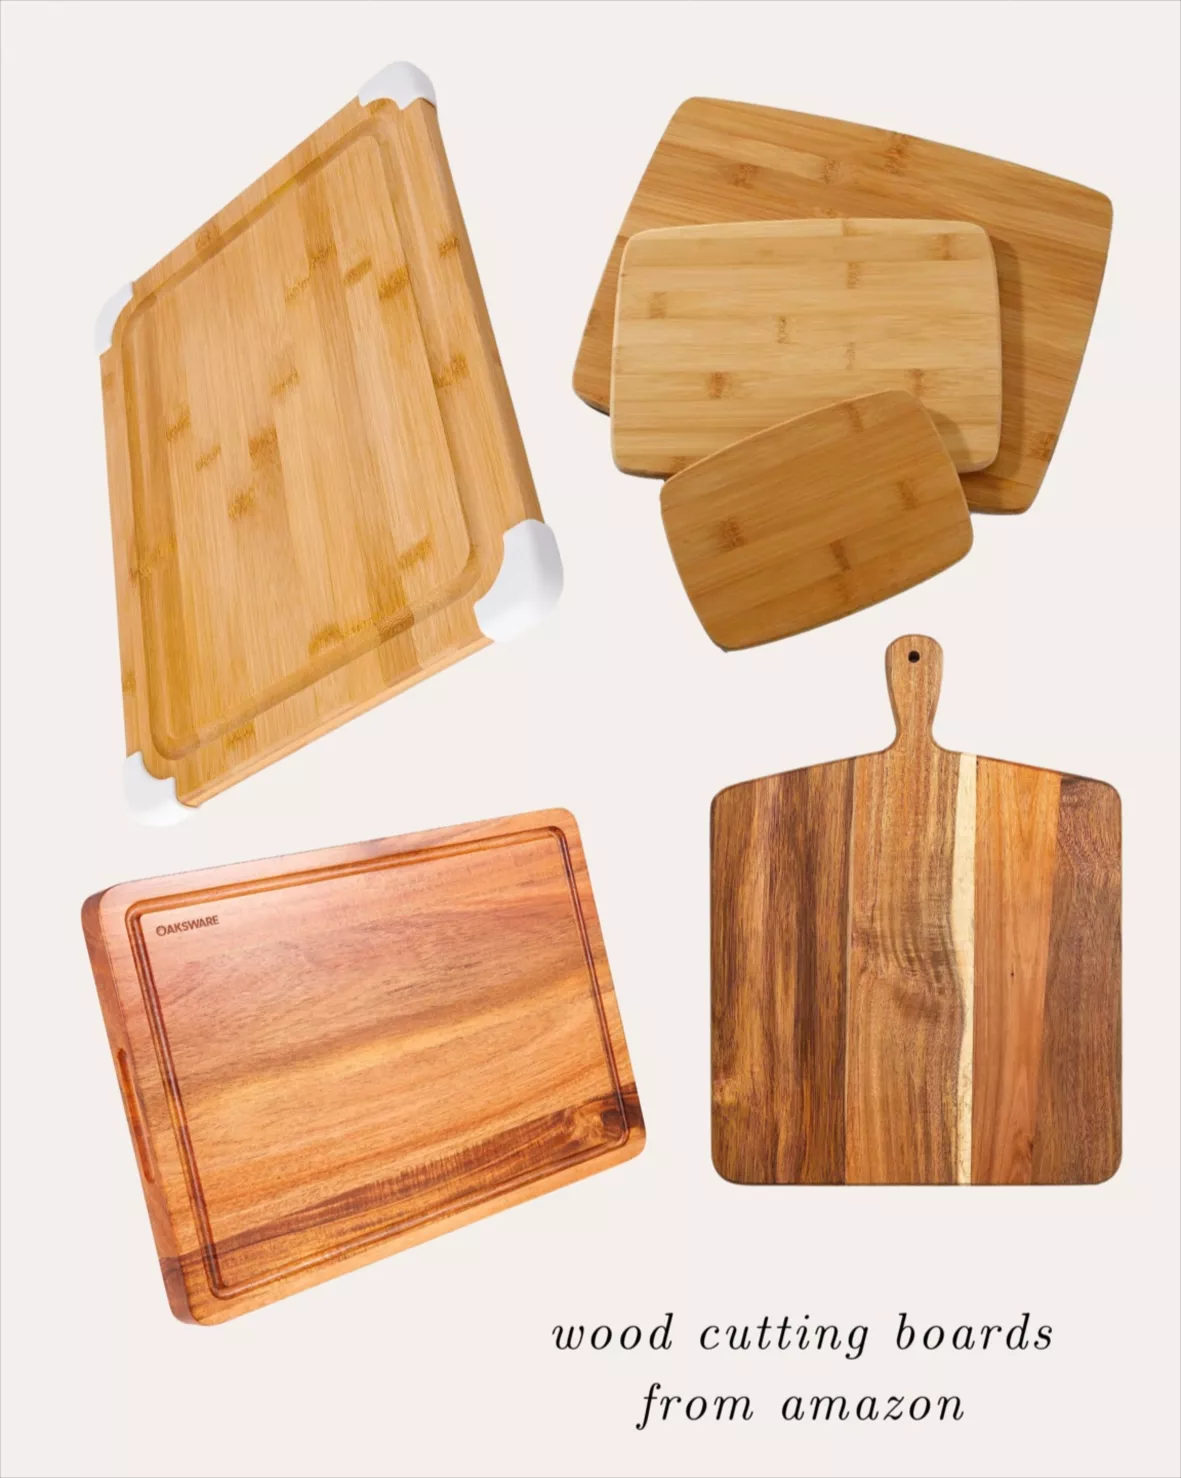 Farberware Nonslip Bamboo Cutting Board with Juice Groove, 11x14 Inch, White